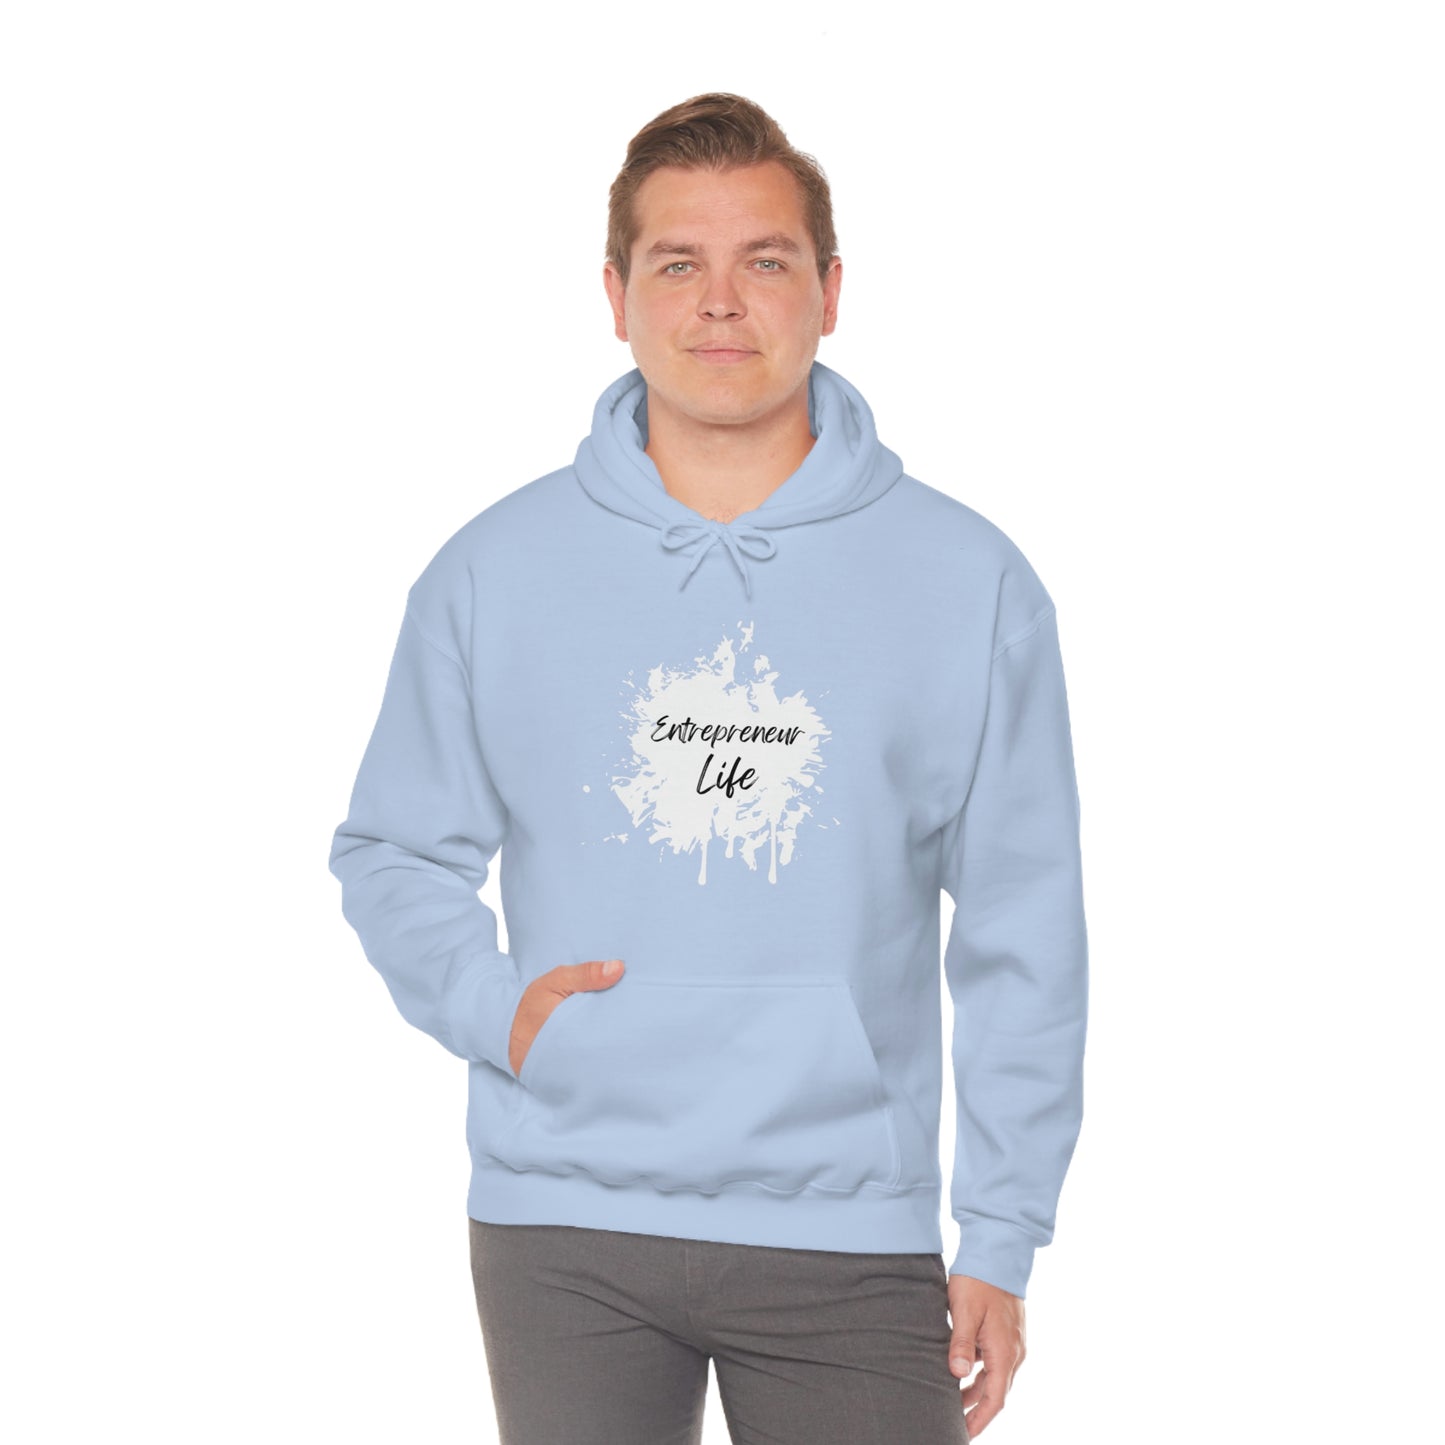 Entrepreneur Life Hooded Sweatshirt